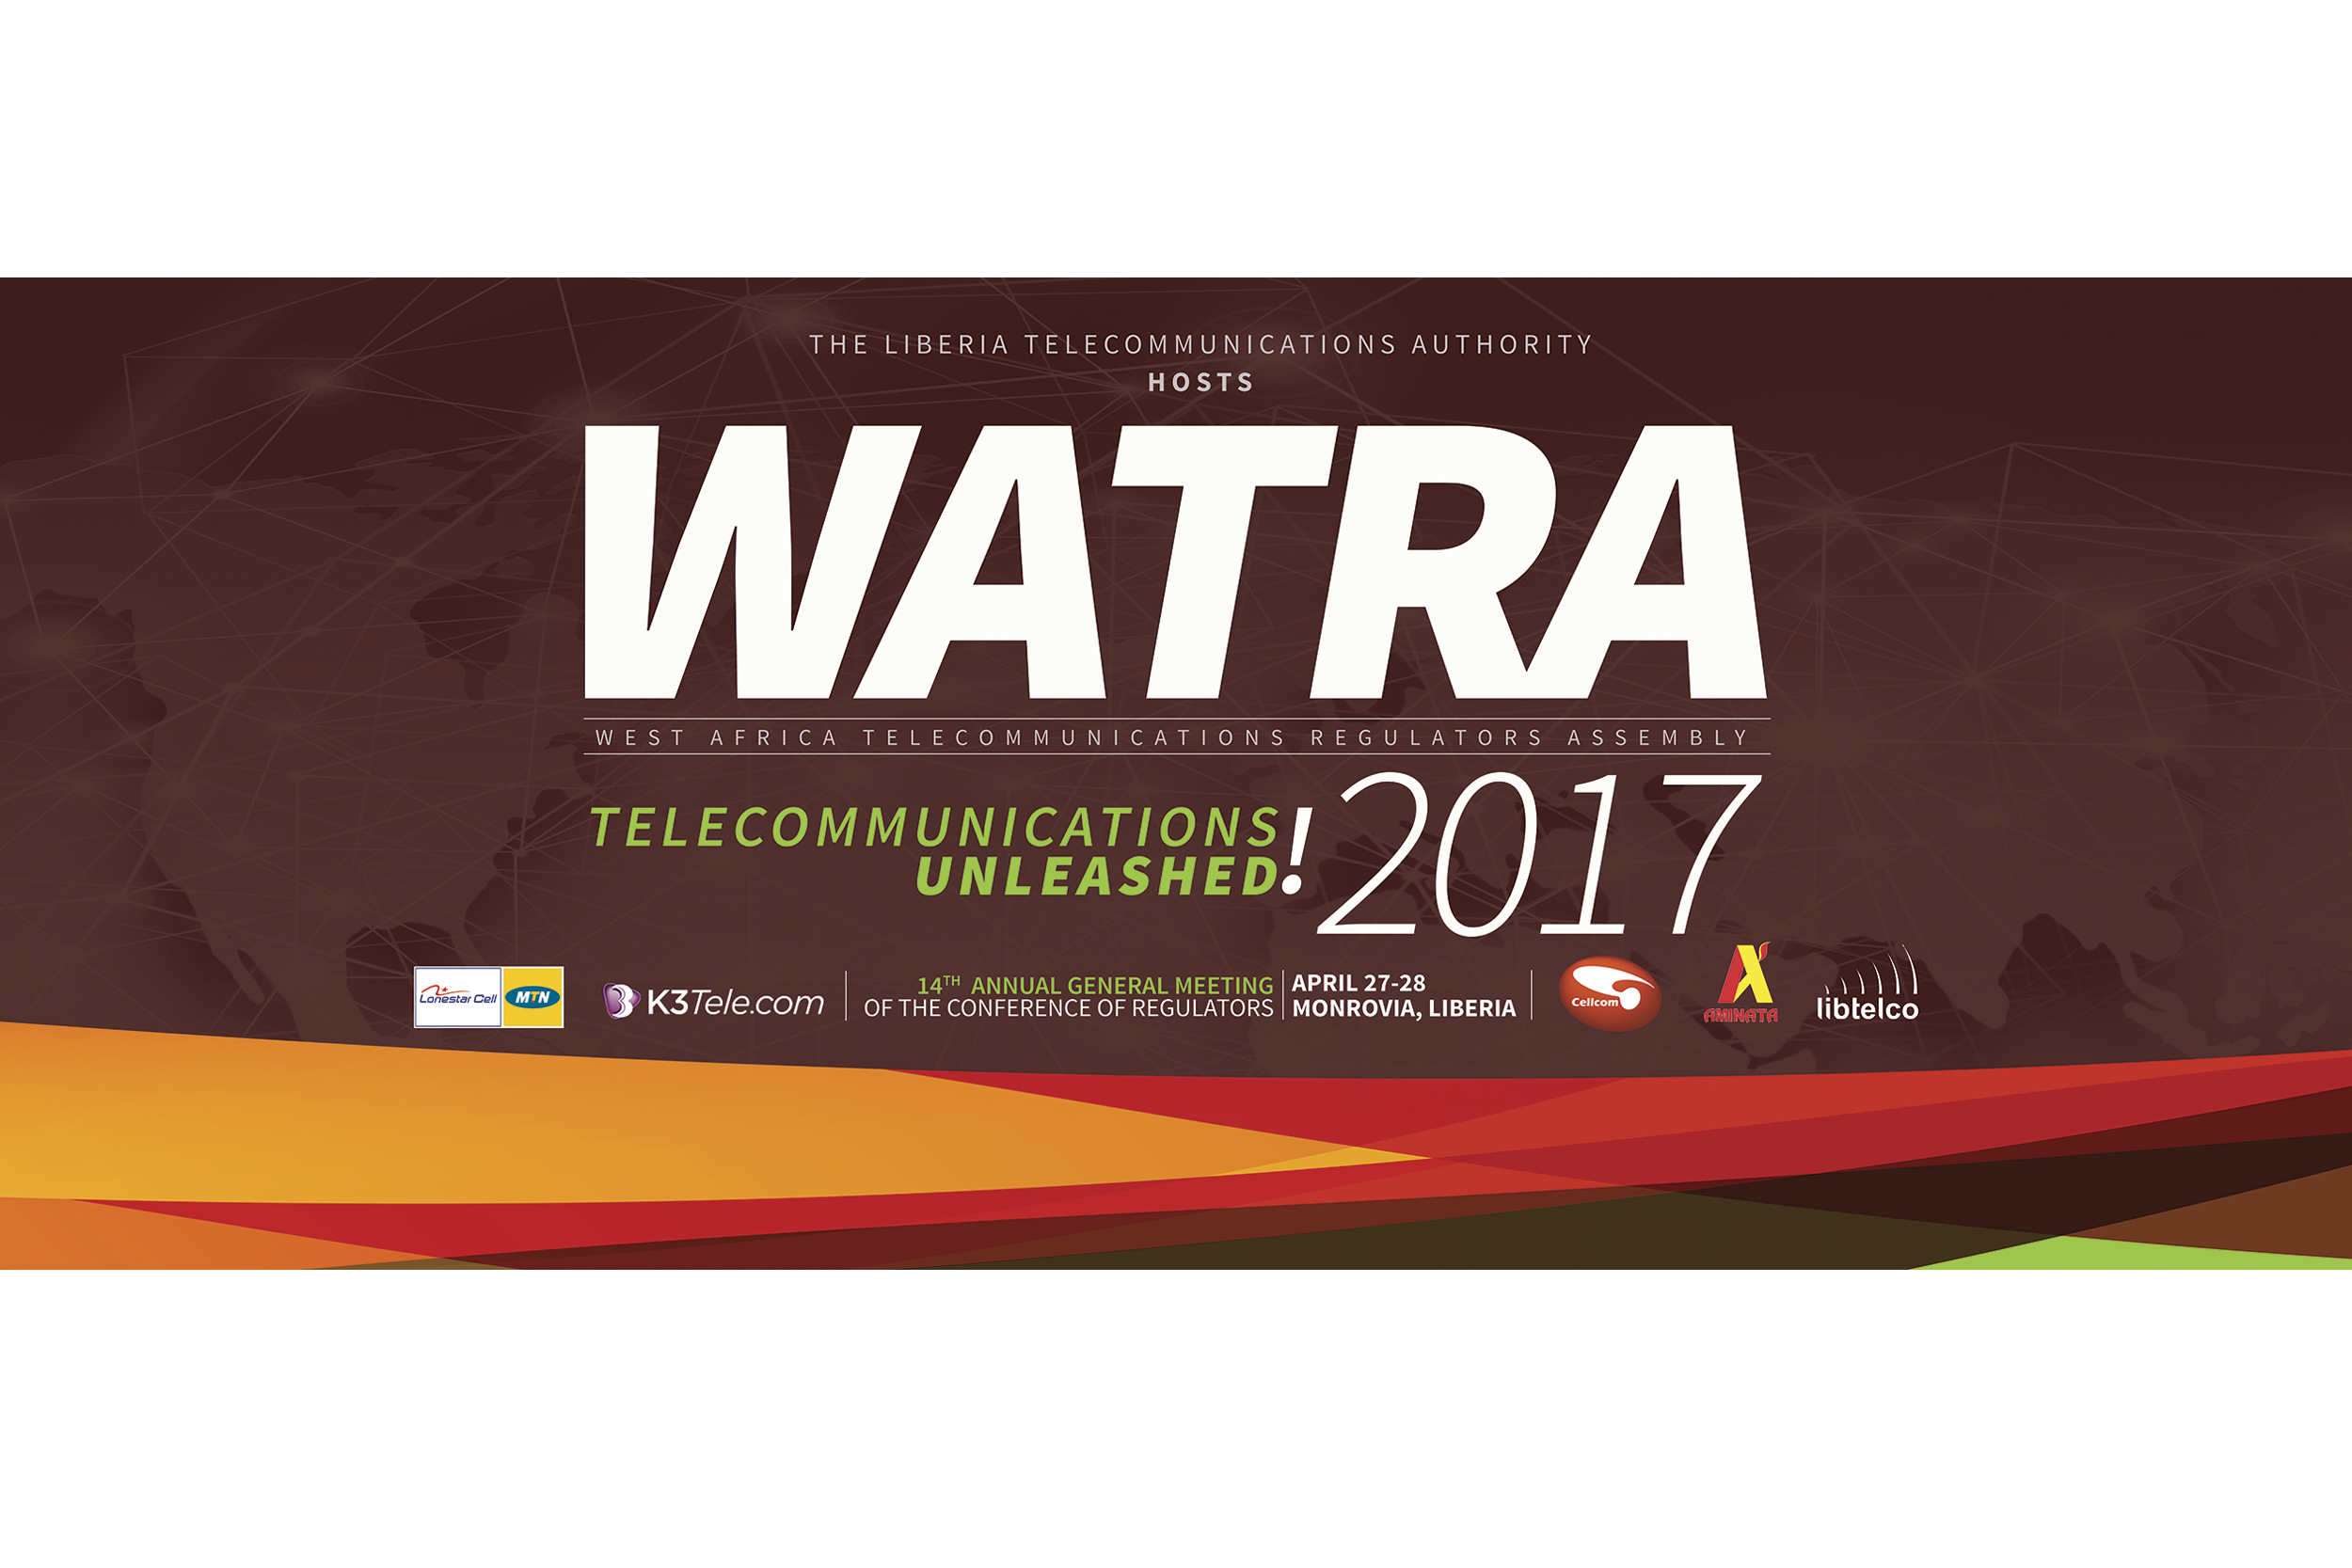 West African Telecommunication Regulatory Assembly